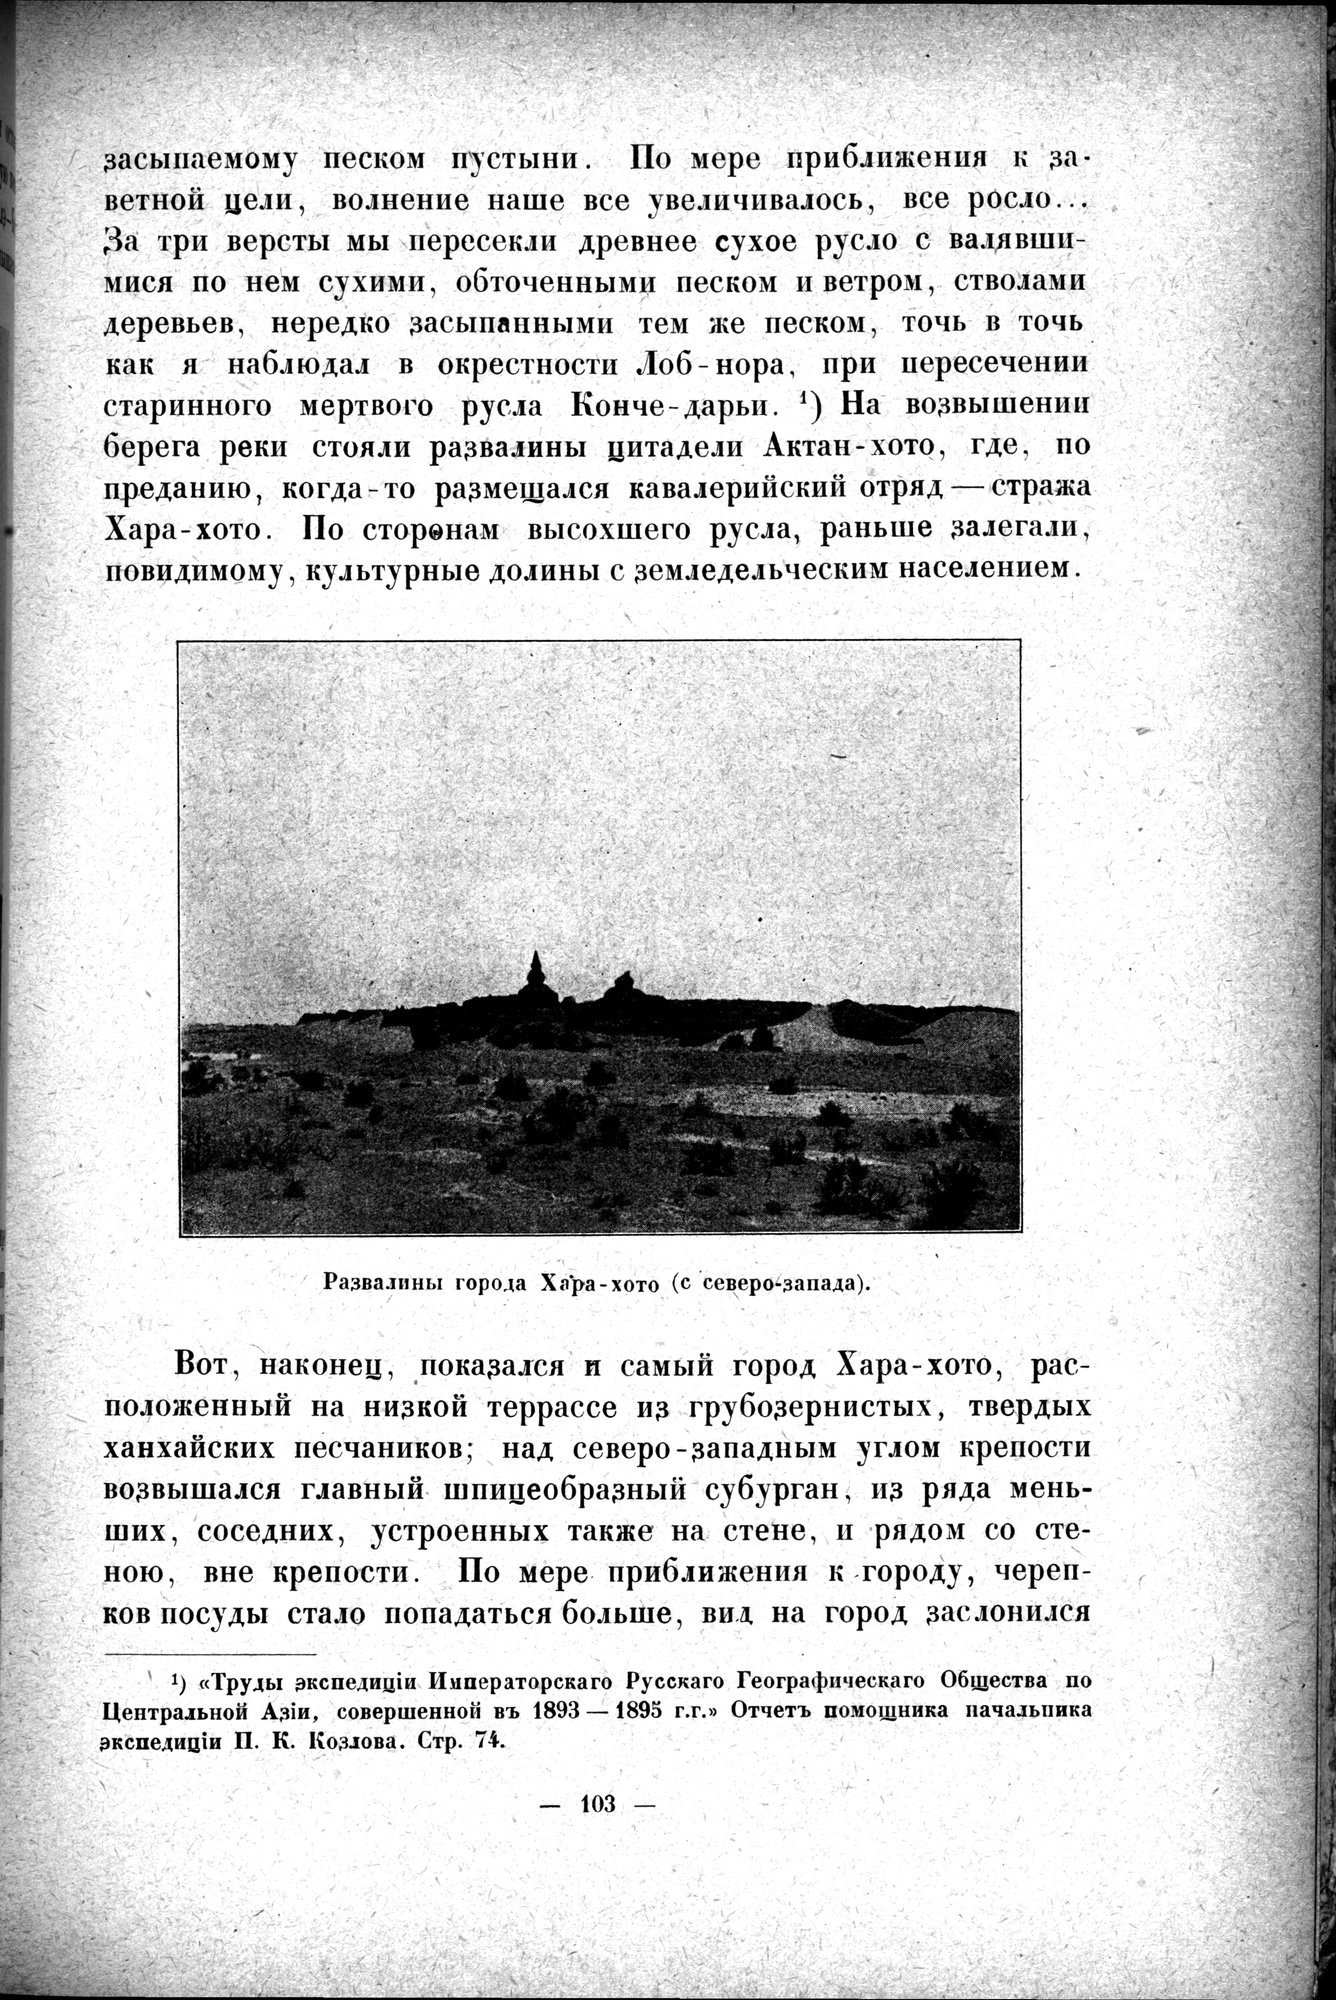 Mongoliya i Amdo i mertby gorod Khara-Khoto : vol.1 / Page 129 (Grayscale High Resolution Image)